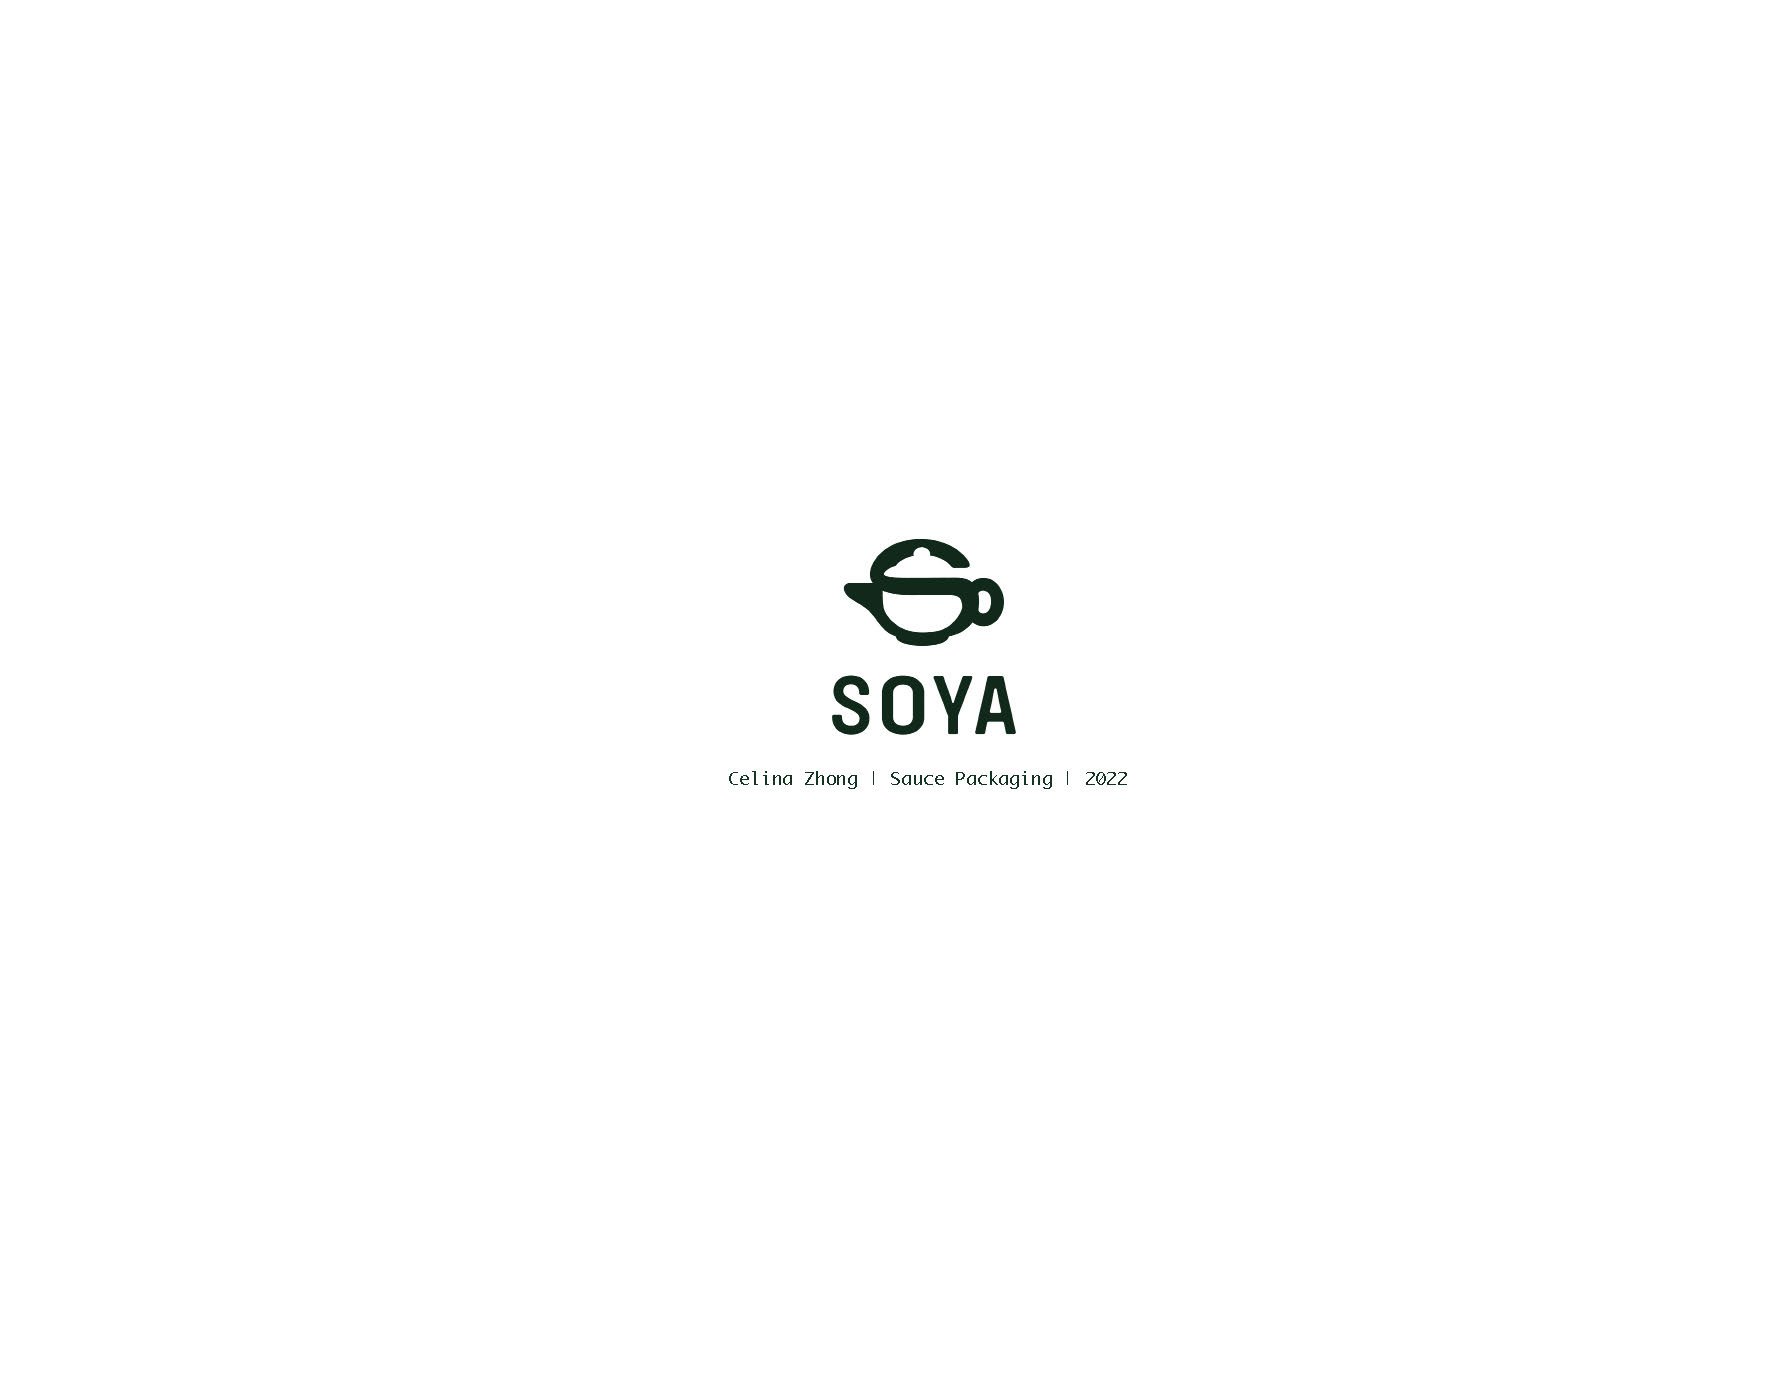 soya-packaging--celina-zhong--page-01--visual-communication-studio-branding-concentration-capilano-university-idea-school-of-design.jpg